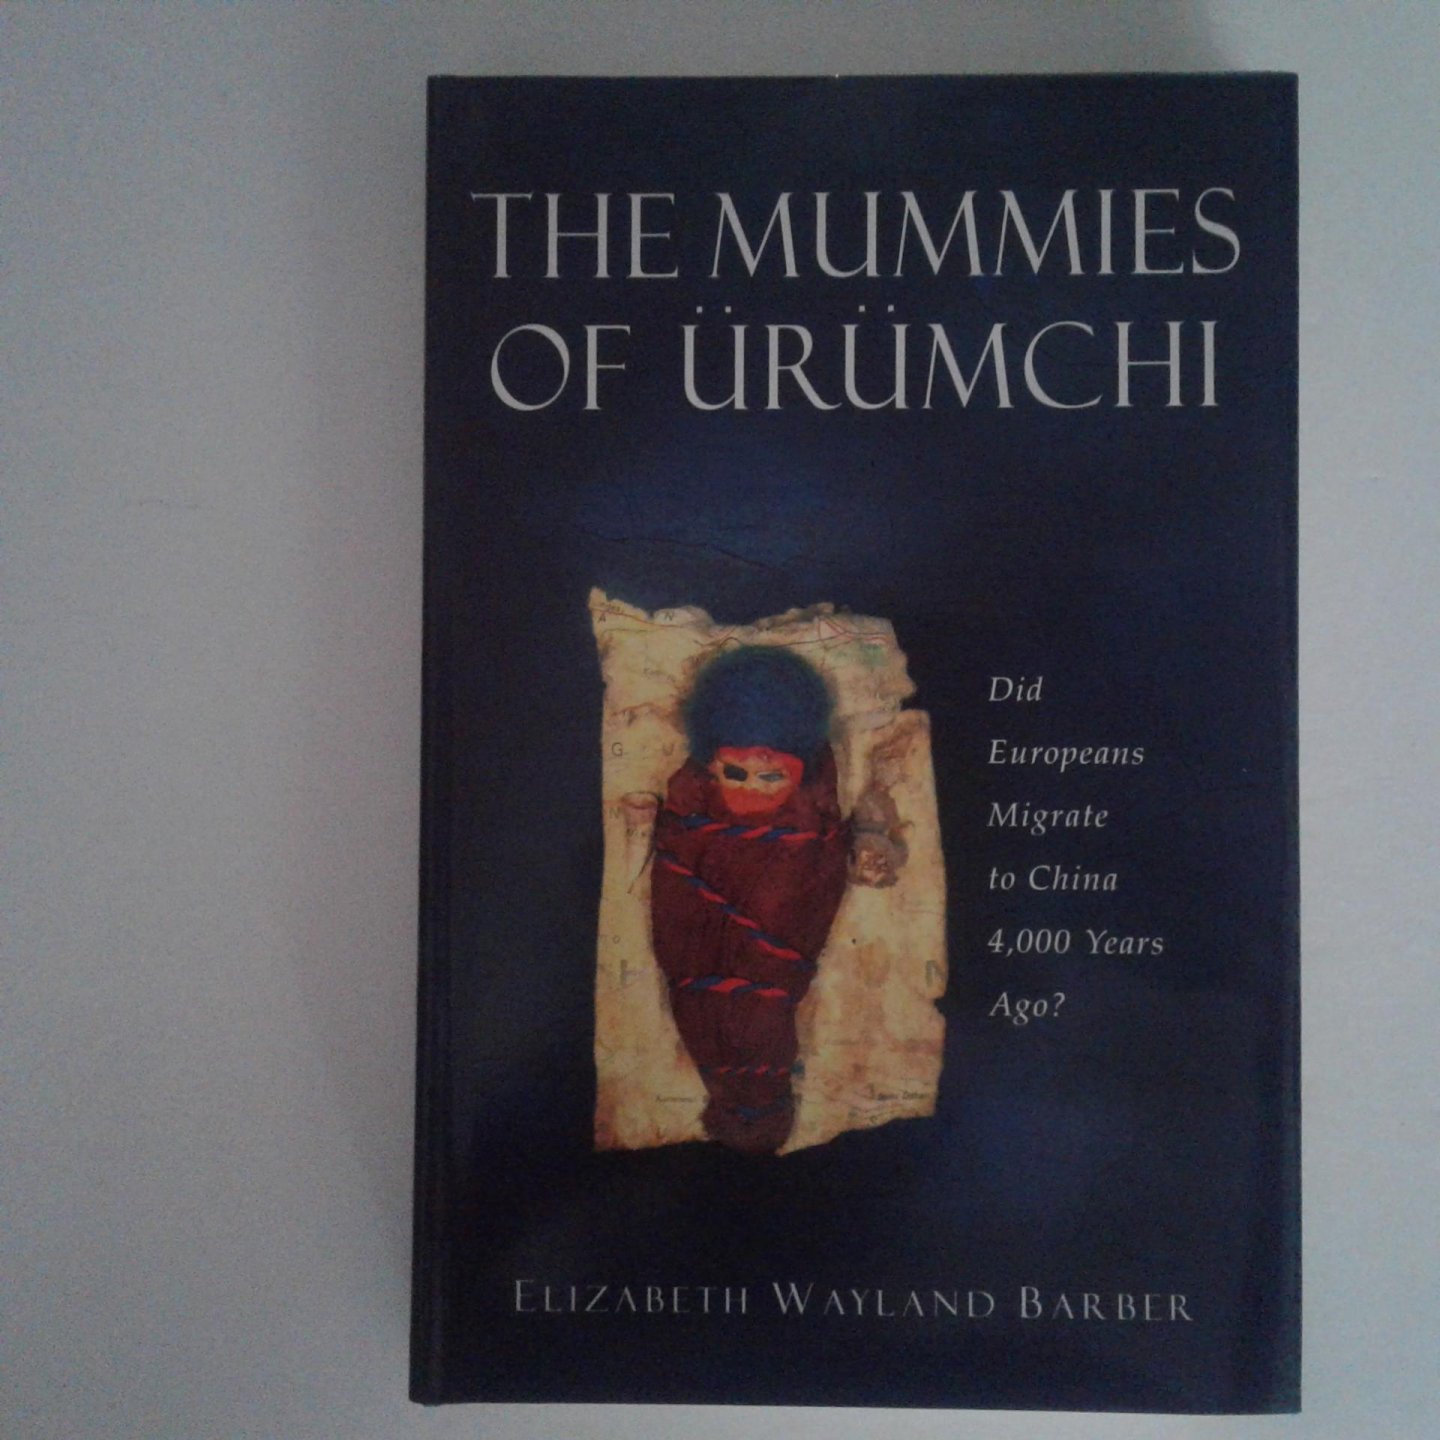 Barber, Elizabeth Wayland - The Mummies of Urumchi